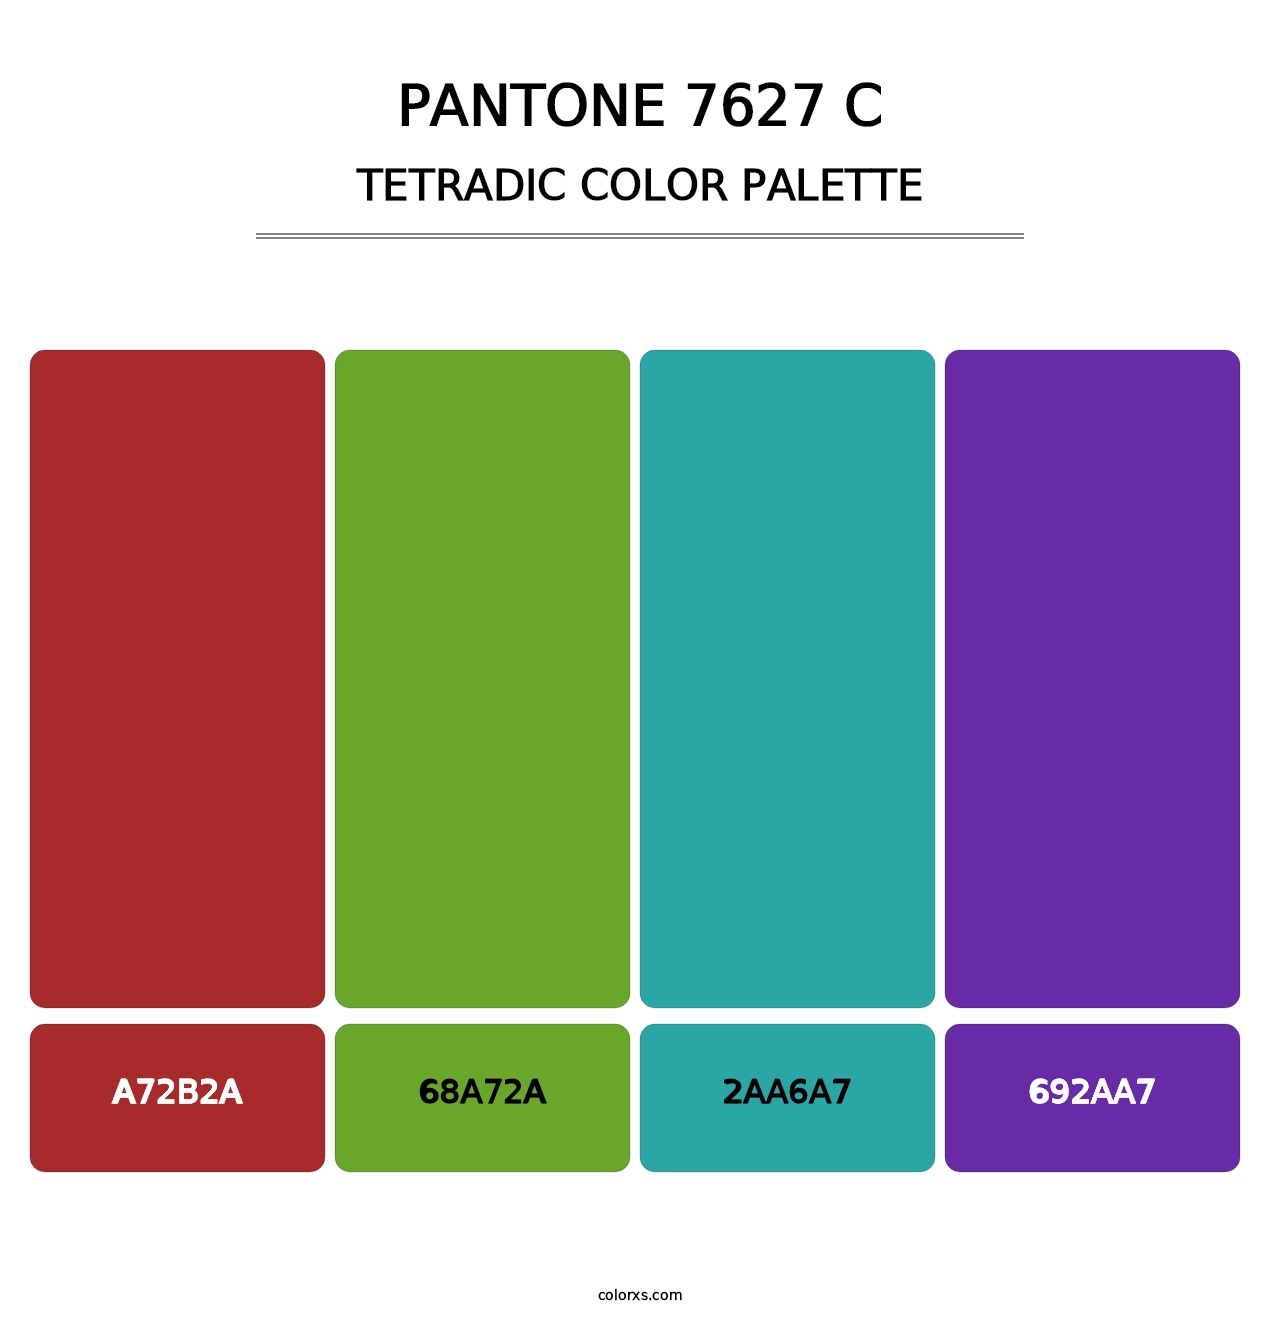 PANTONE 7627 C - Tetradic Color Palette